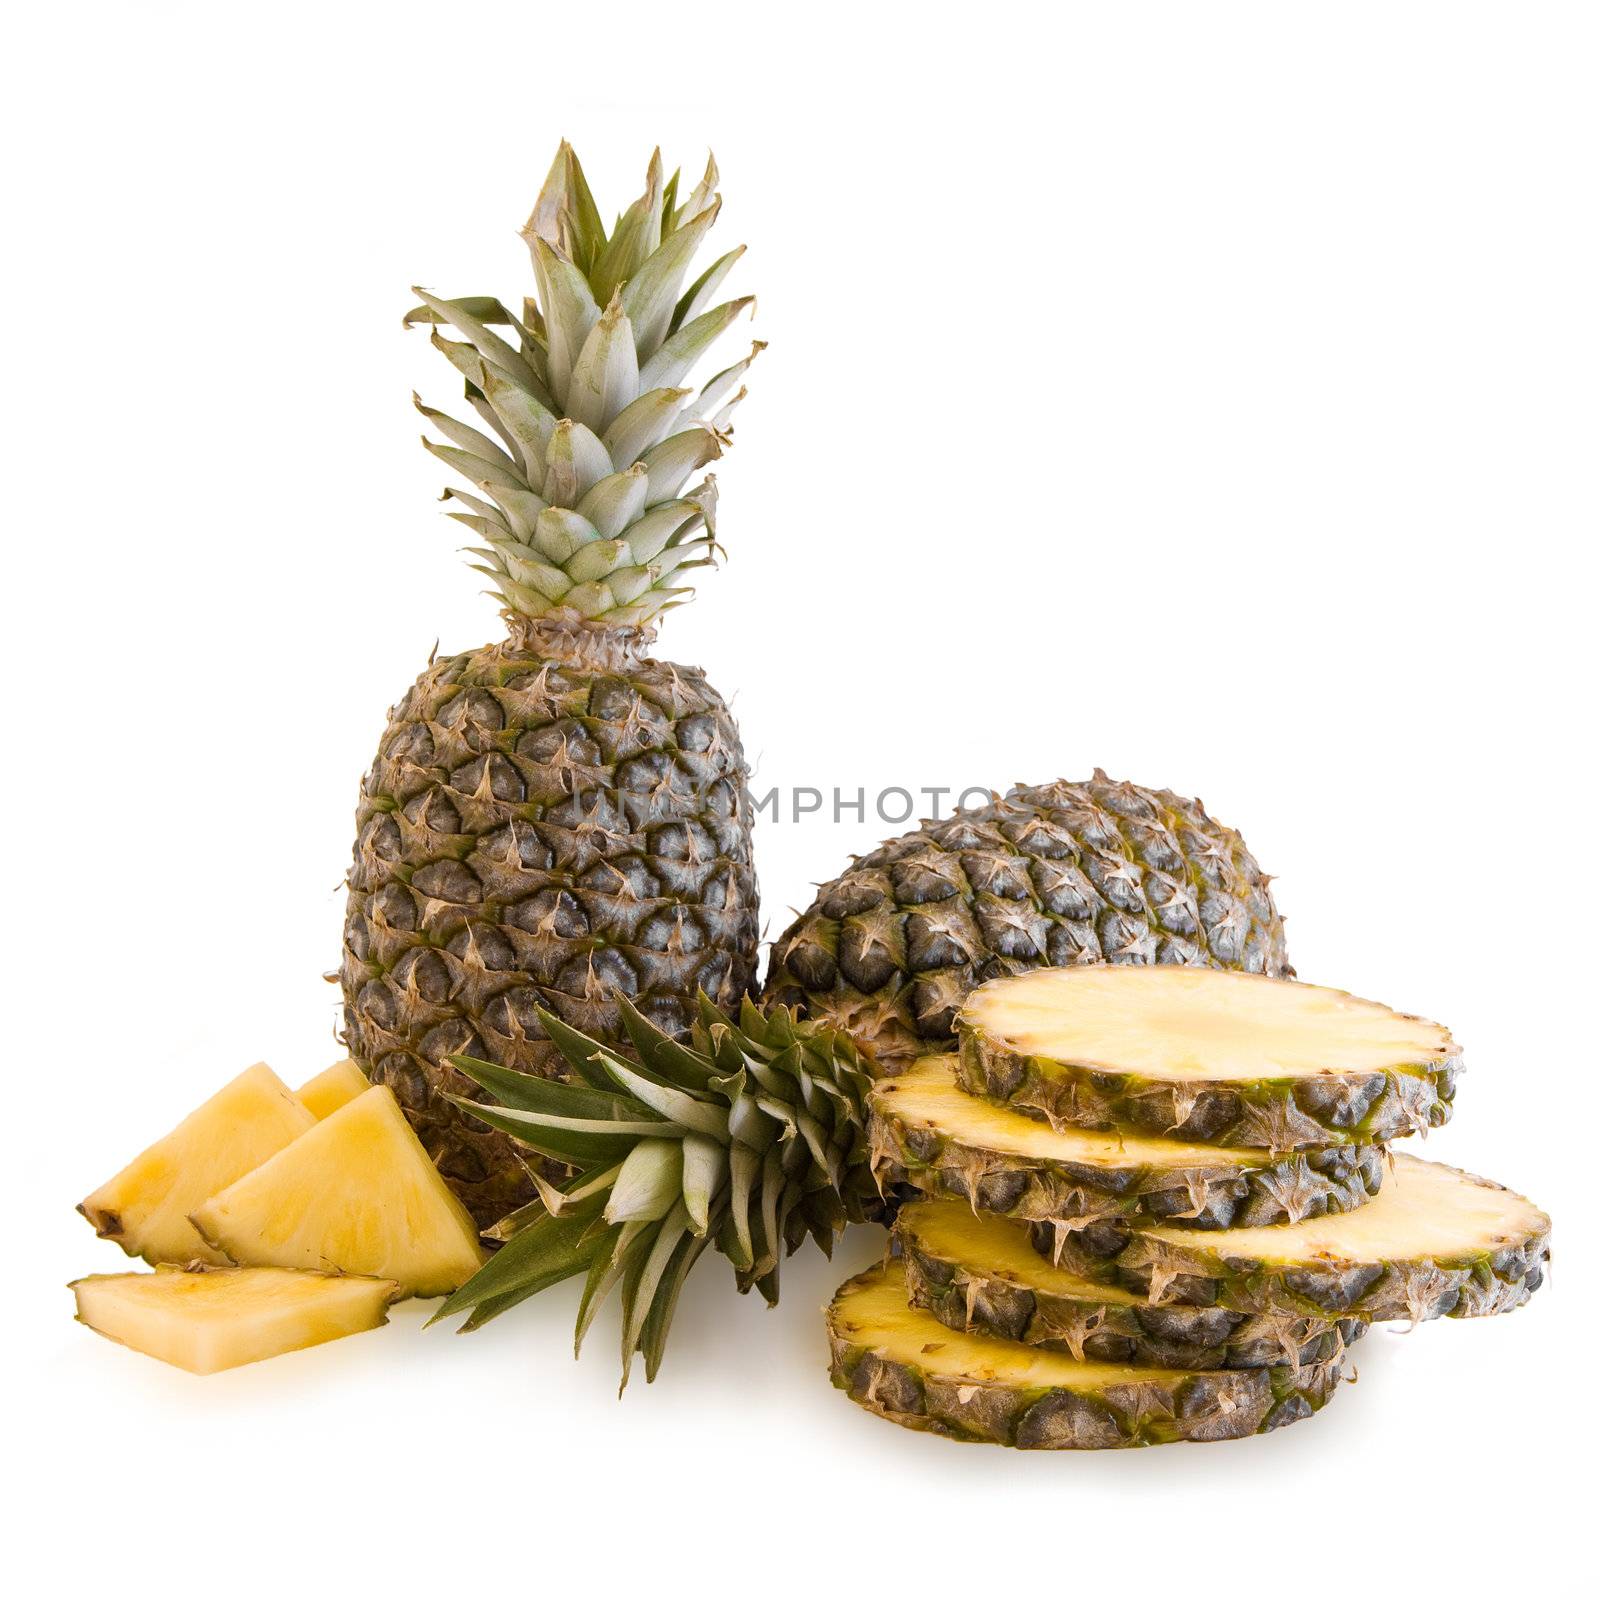 Fresh pineapple fruits by Gbuglok